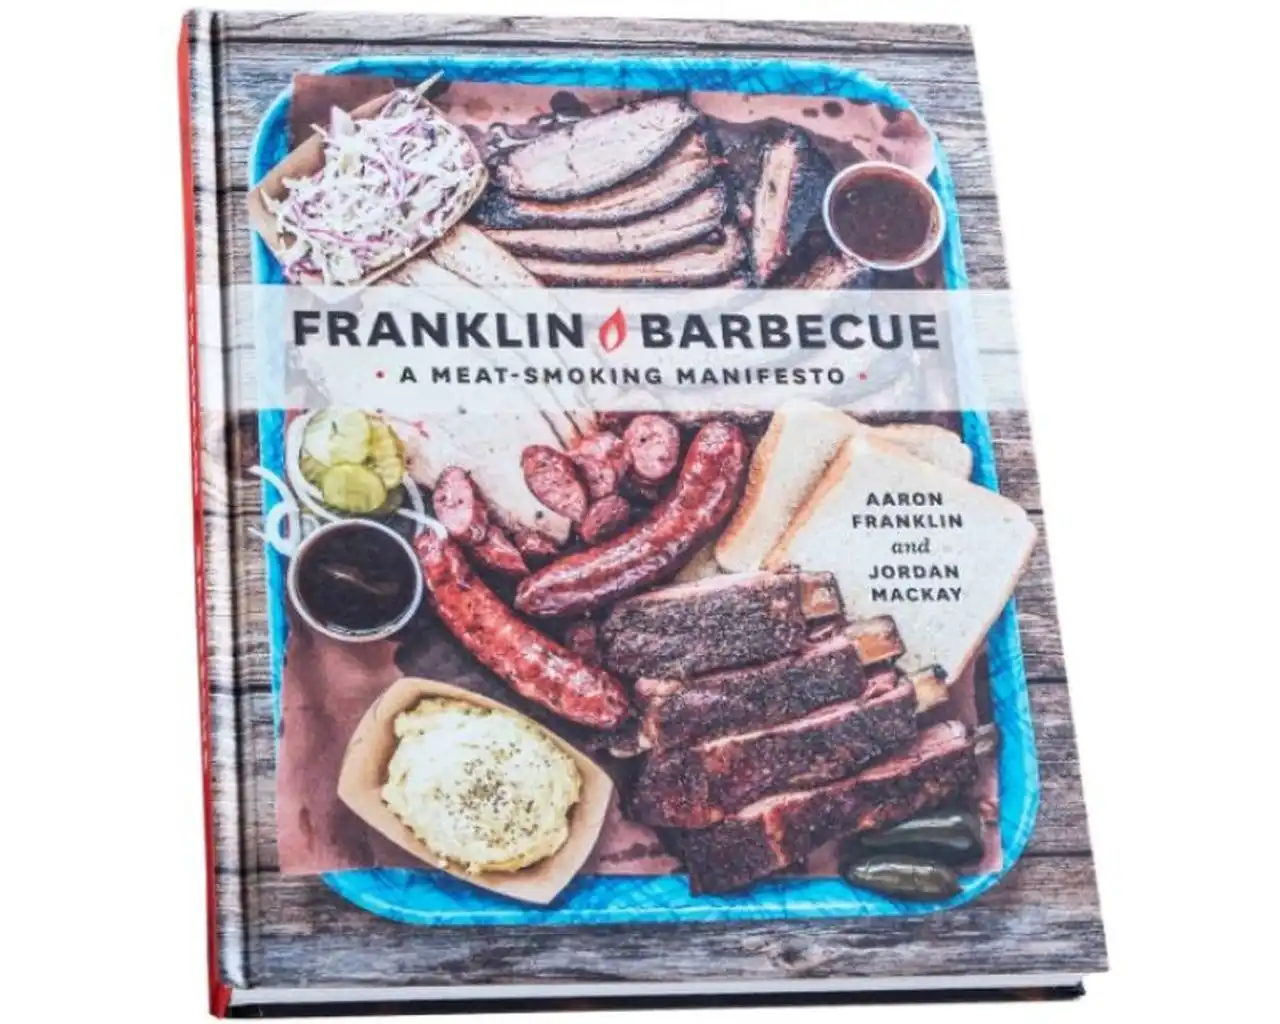 Franklin Barbecue Meat Manifesto Cookbook by Aaron Franklin & Jordan Mackay